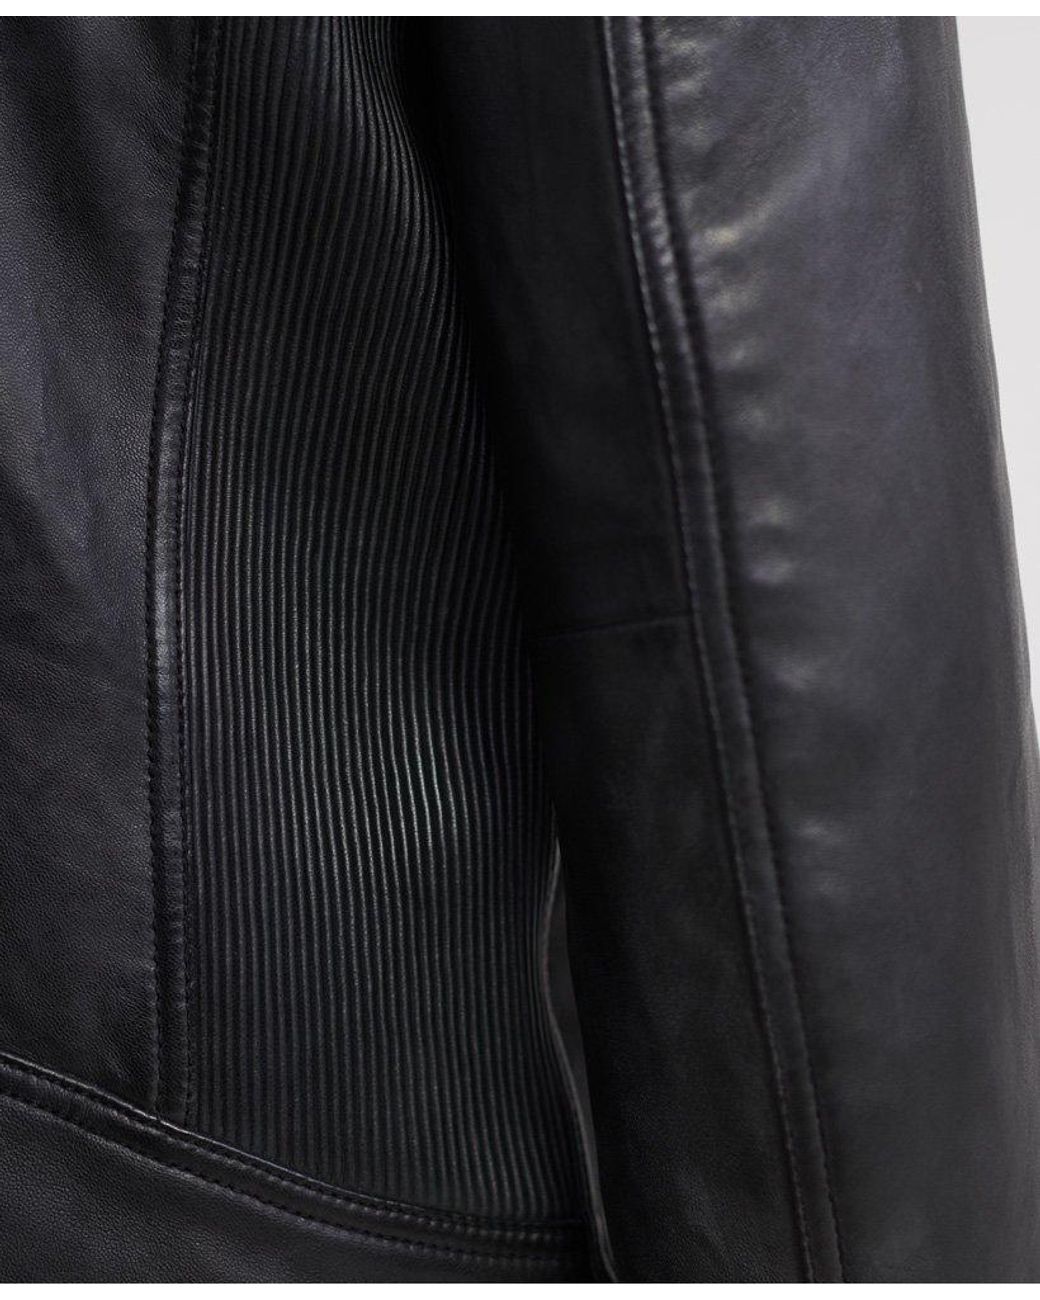 Superdry City Hero Leather Racer Jacket in Black for Men - Save 31% | Lyst